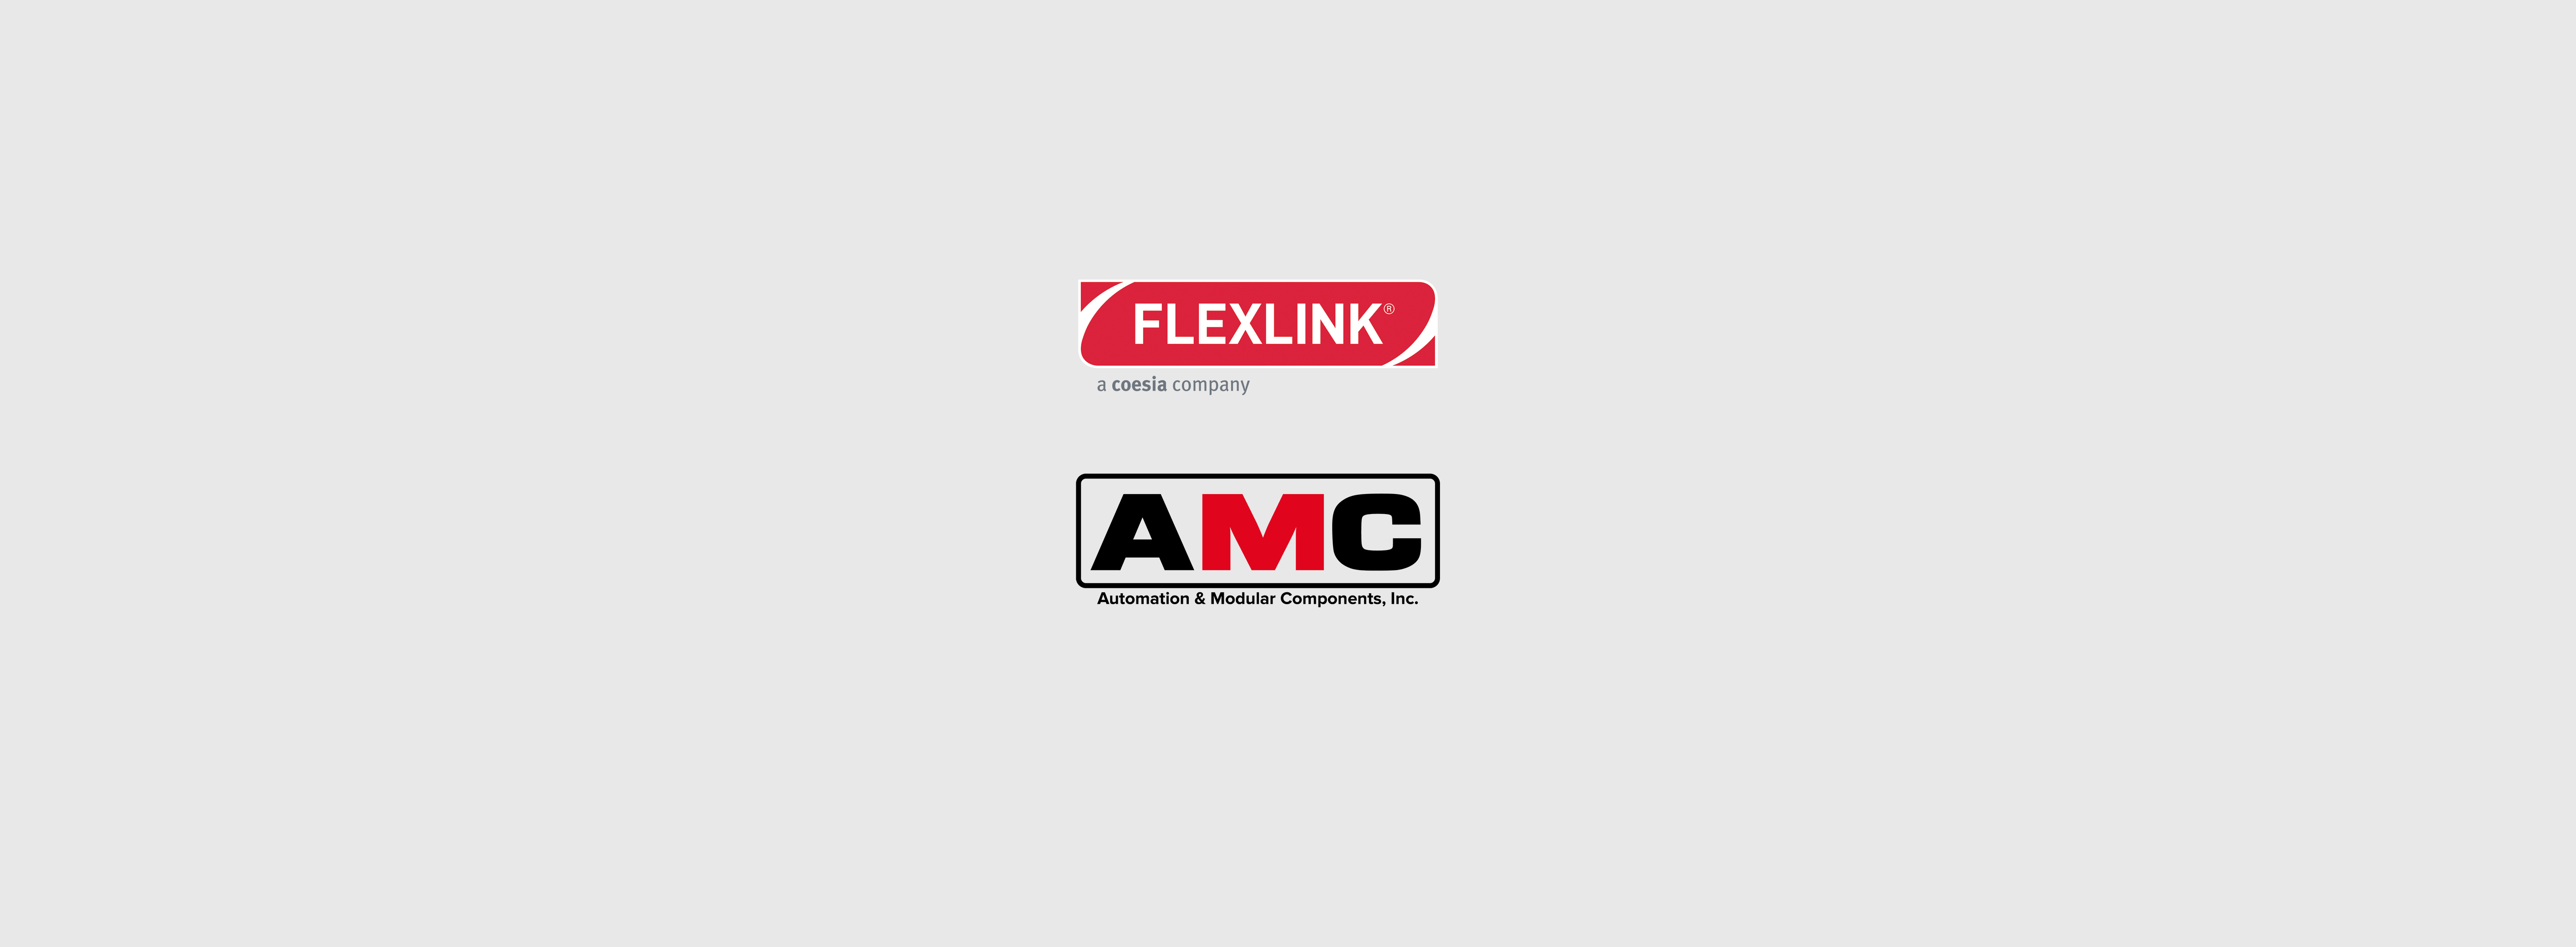 FlexLink enhances its automation portfolio with the acquisition of AMC, LLC